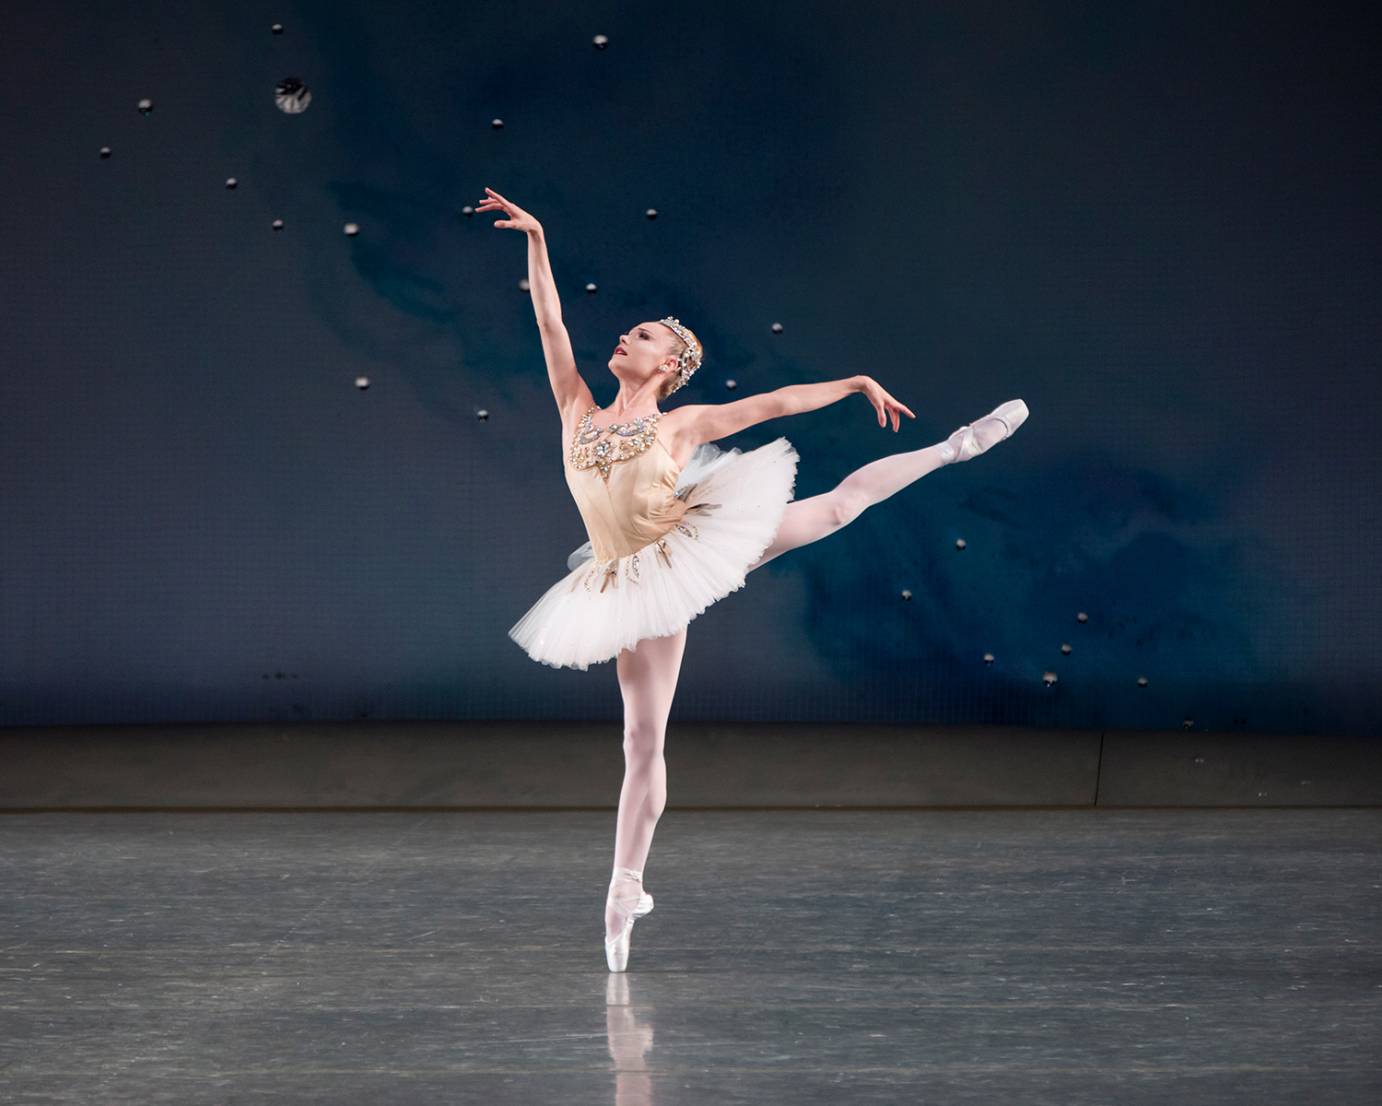 Sara Mearns wears a white tutu as she balances in arabesque